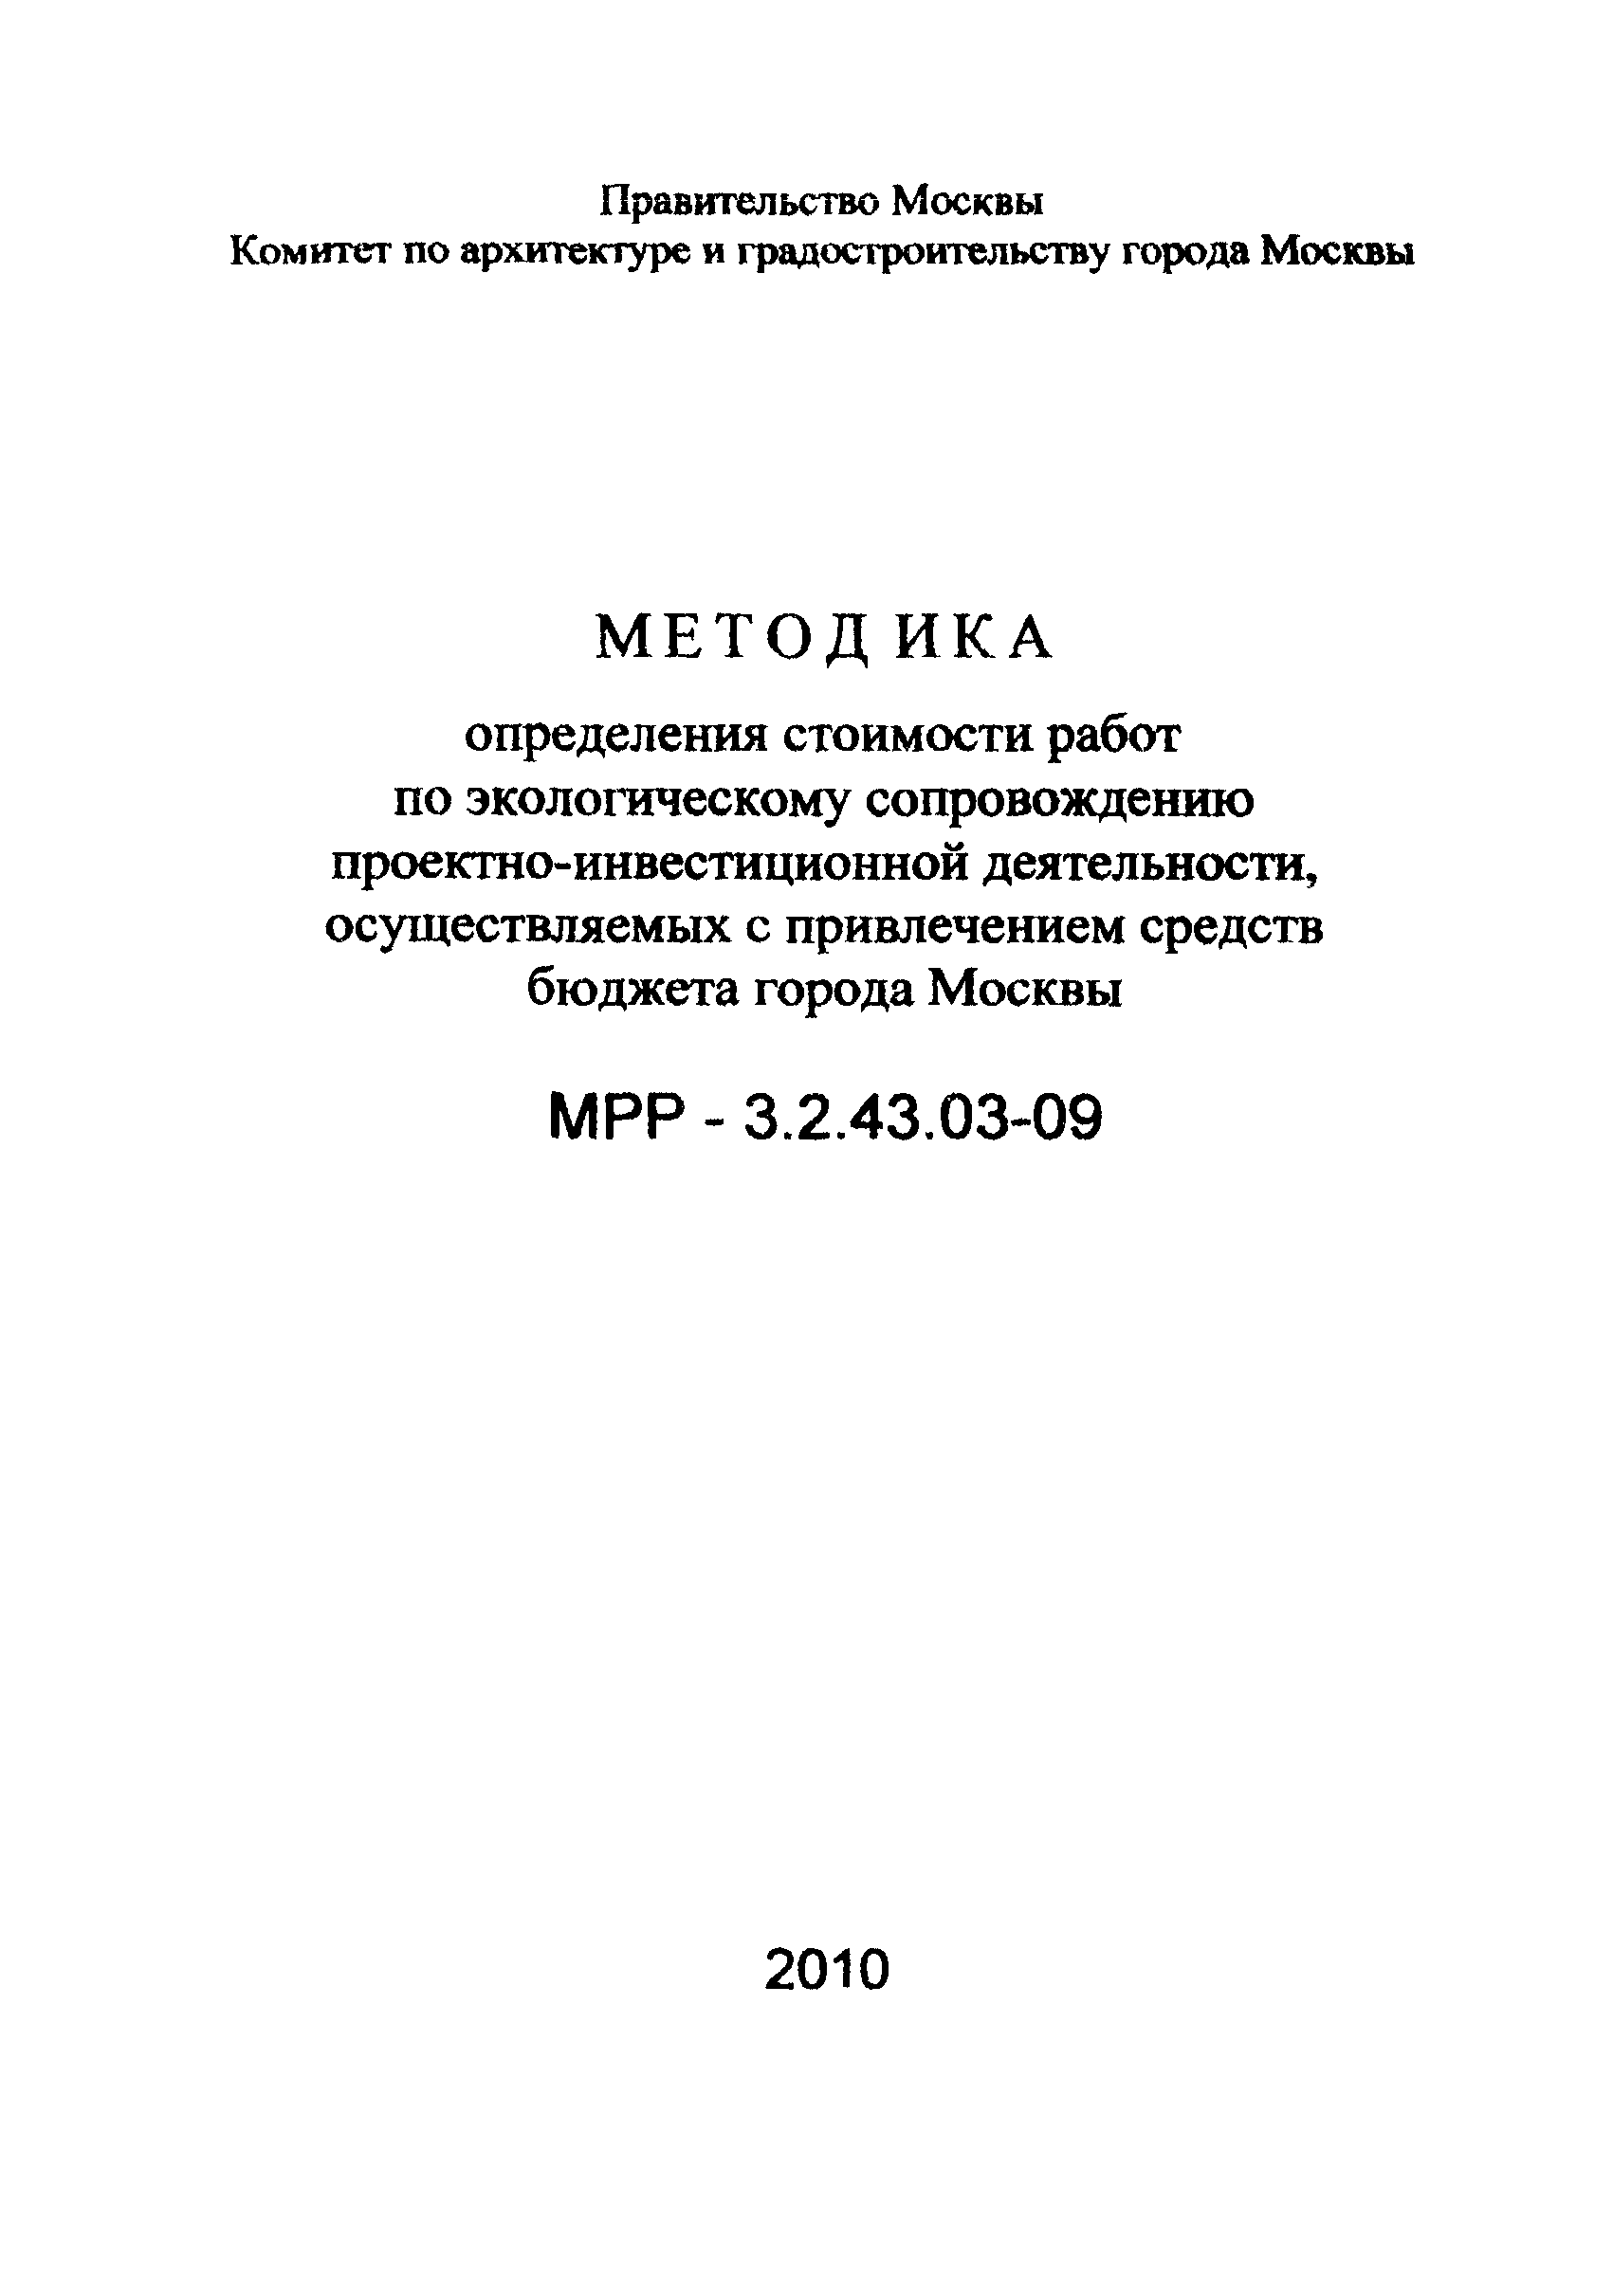 МРР 3.2.43.03-09